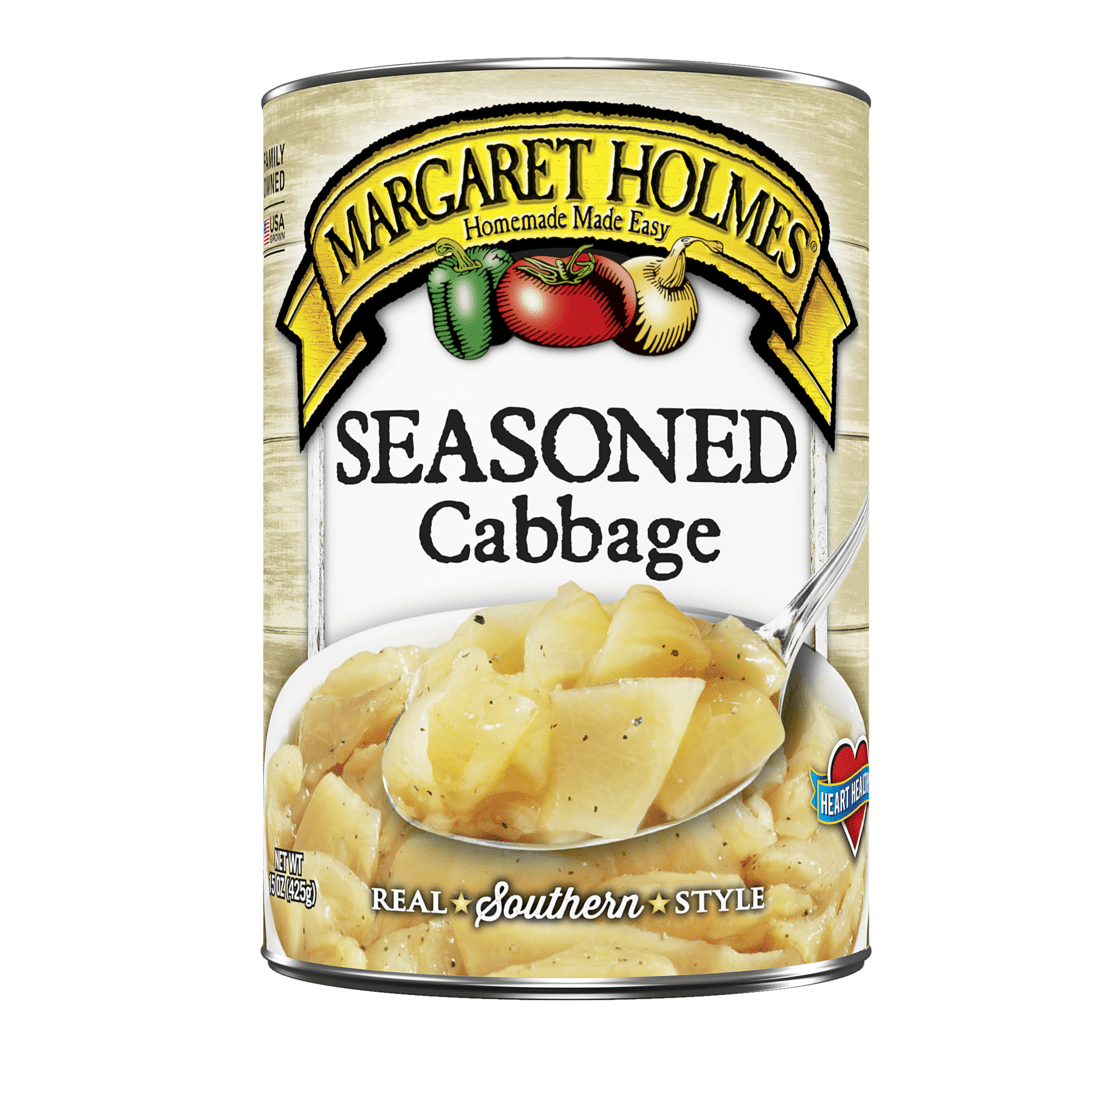 Margaret Holmes Seasoned Cabbage, 15 oz Can